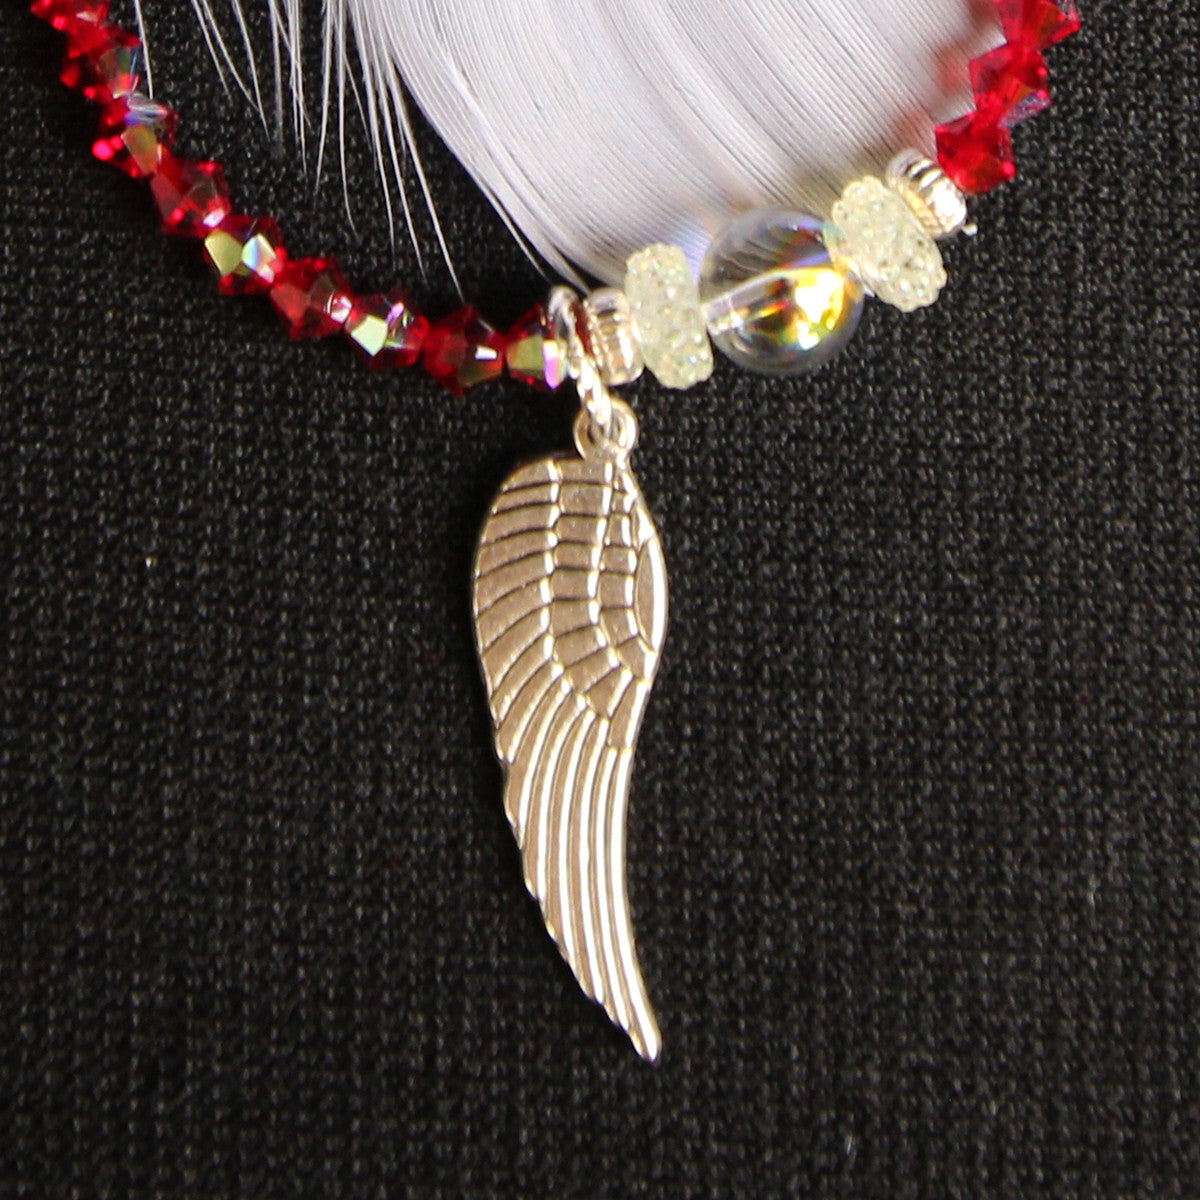 Archangel Uriel Arm Candy Bracelet